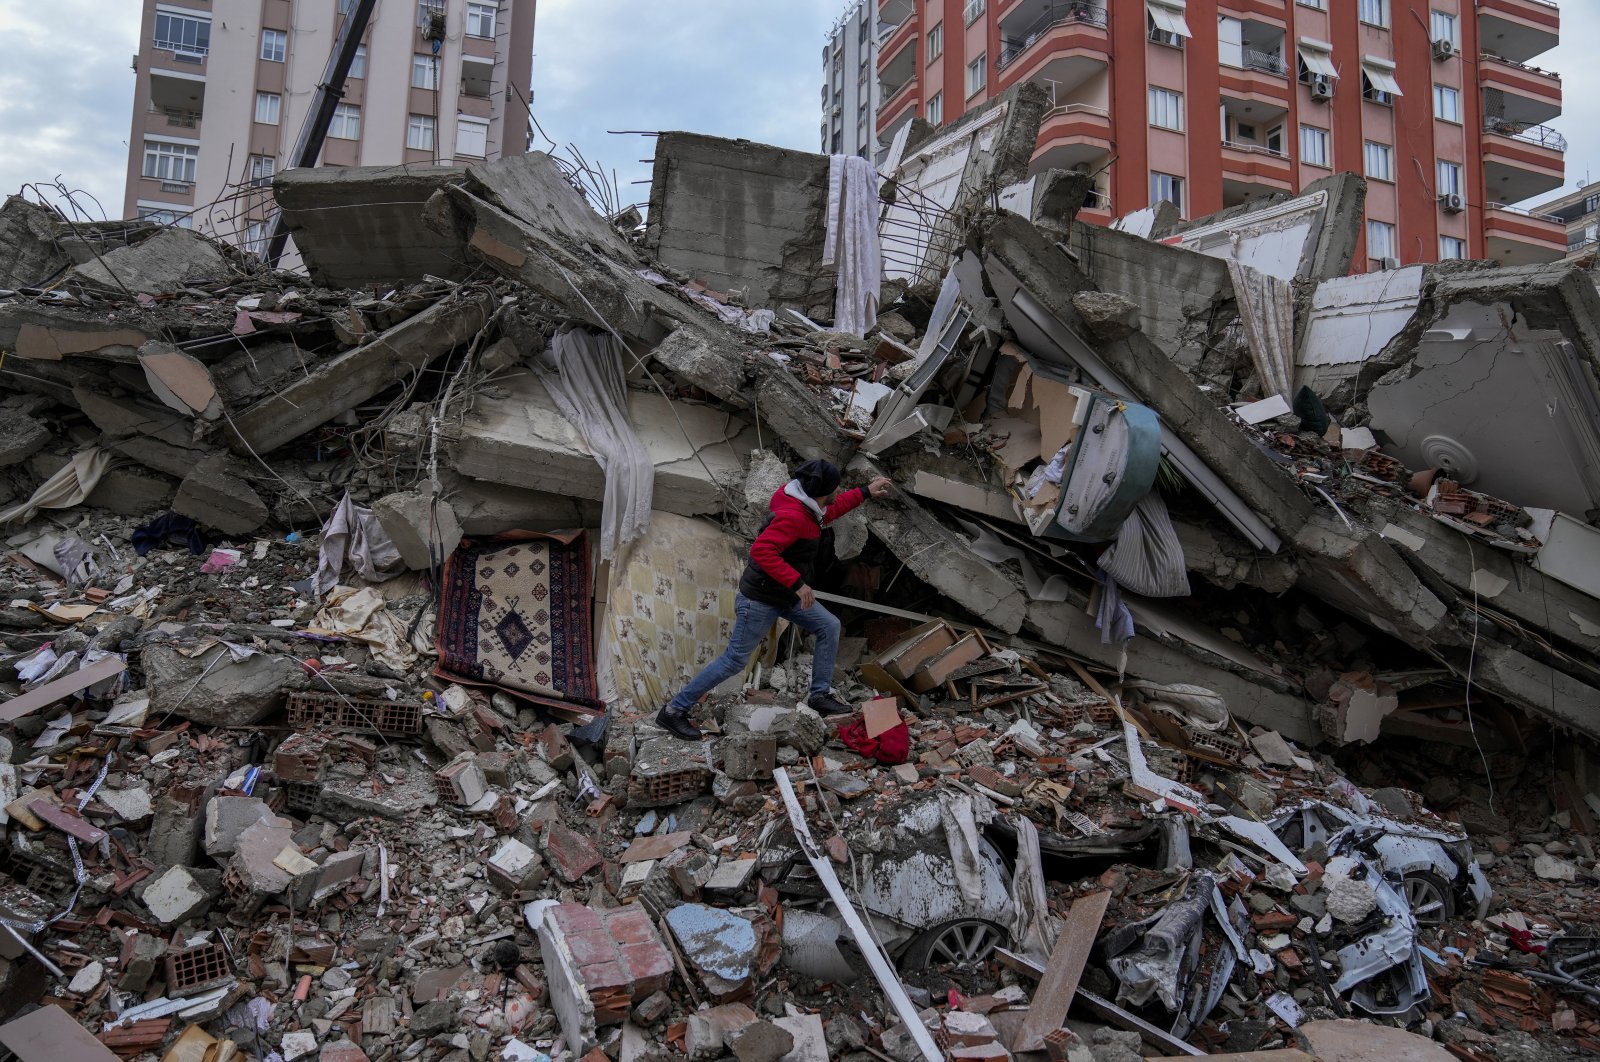 Gempa bumi di Türkiye: Hati yang hangat di daerah bencana yang dingin